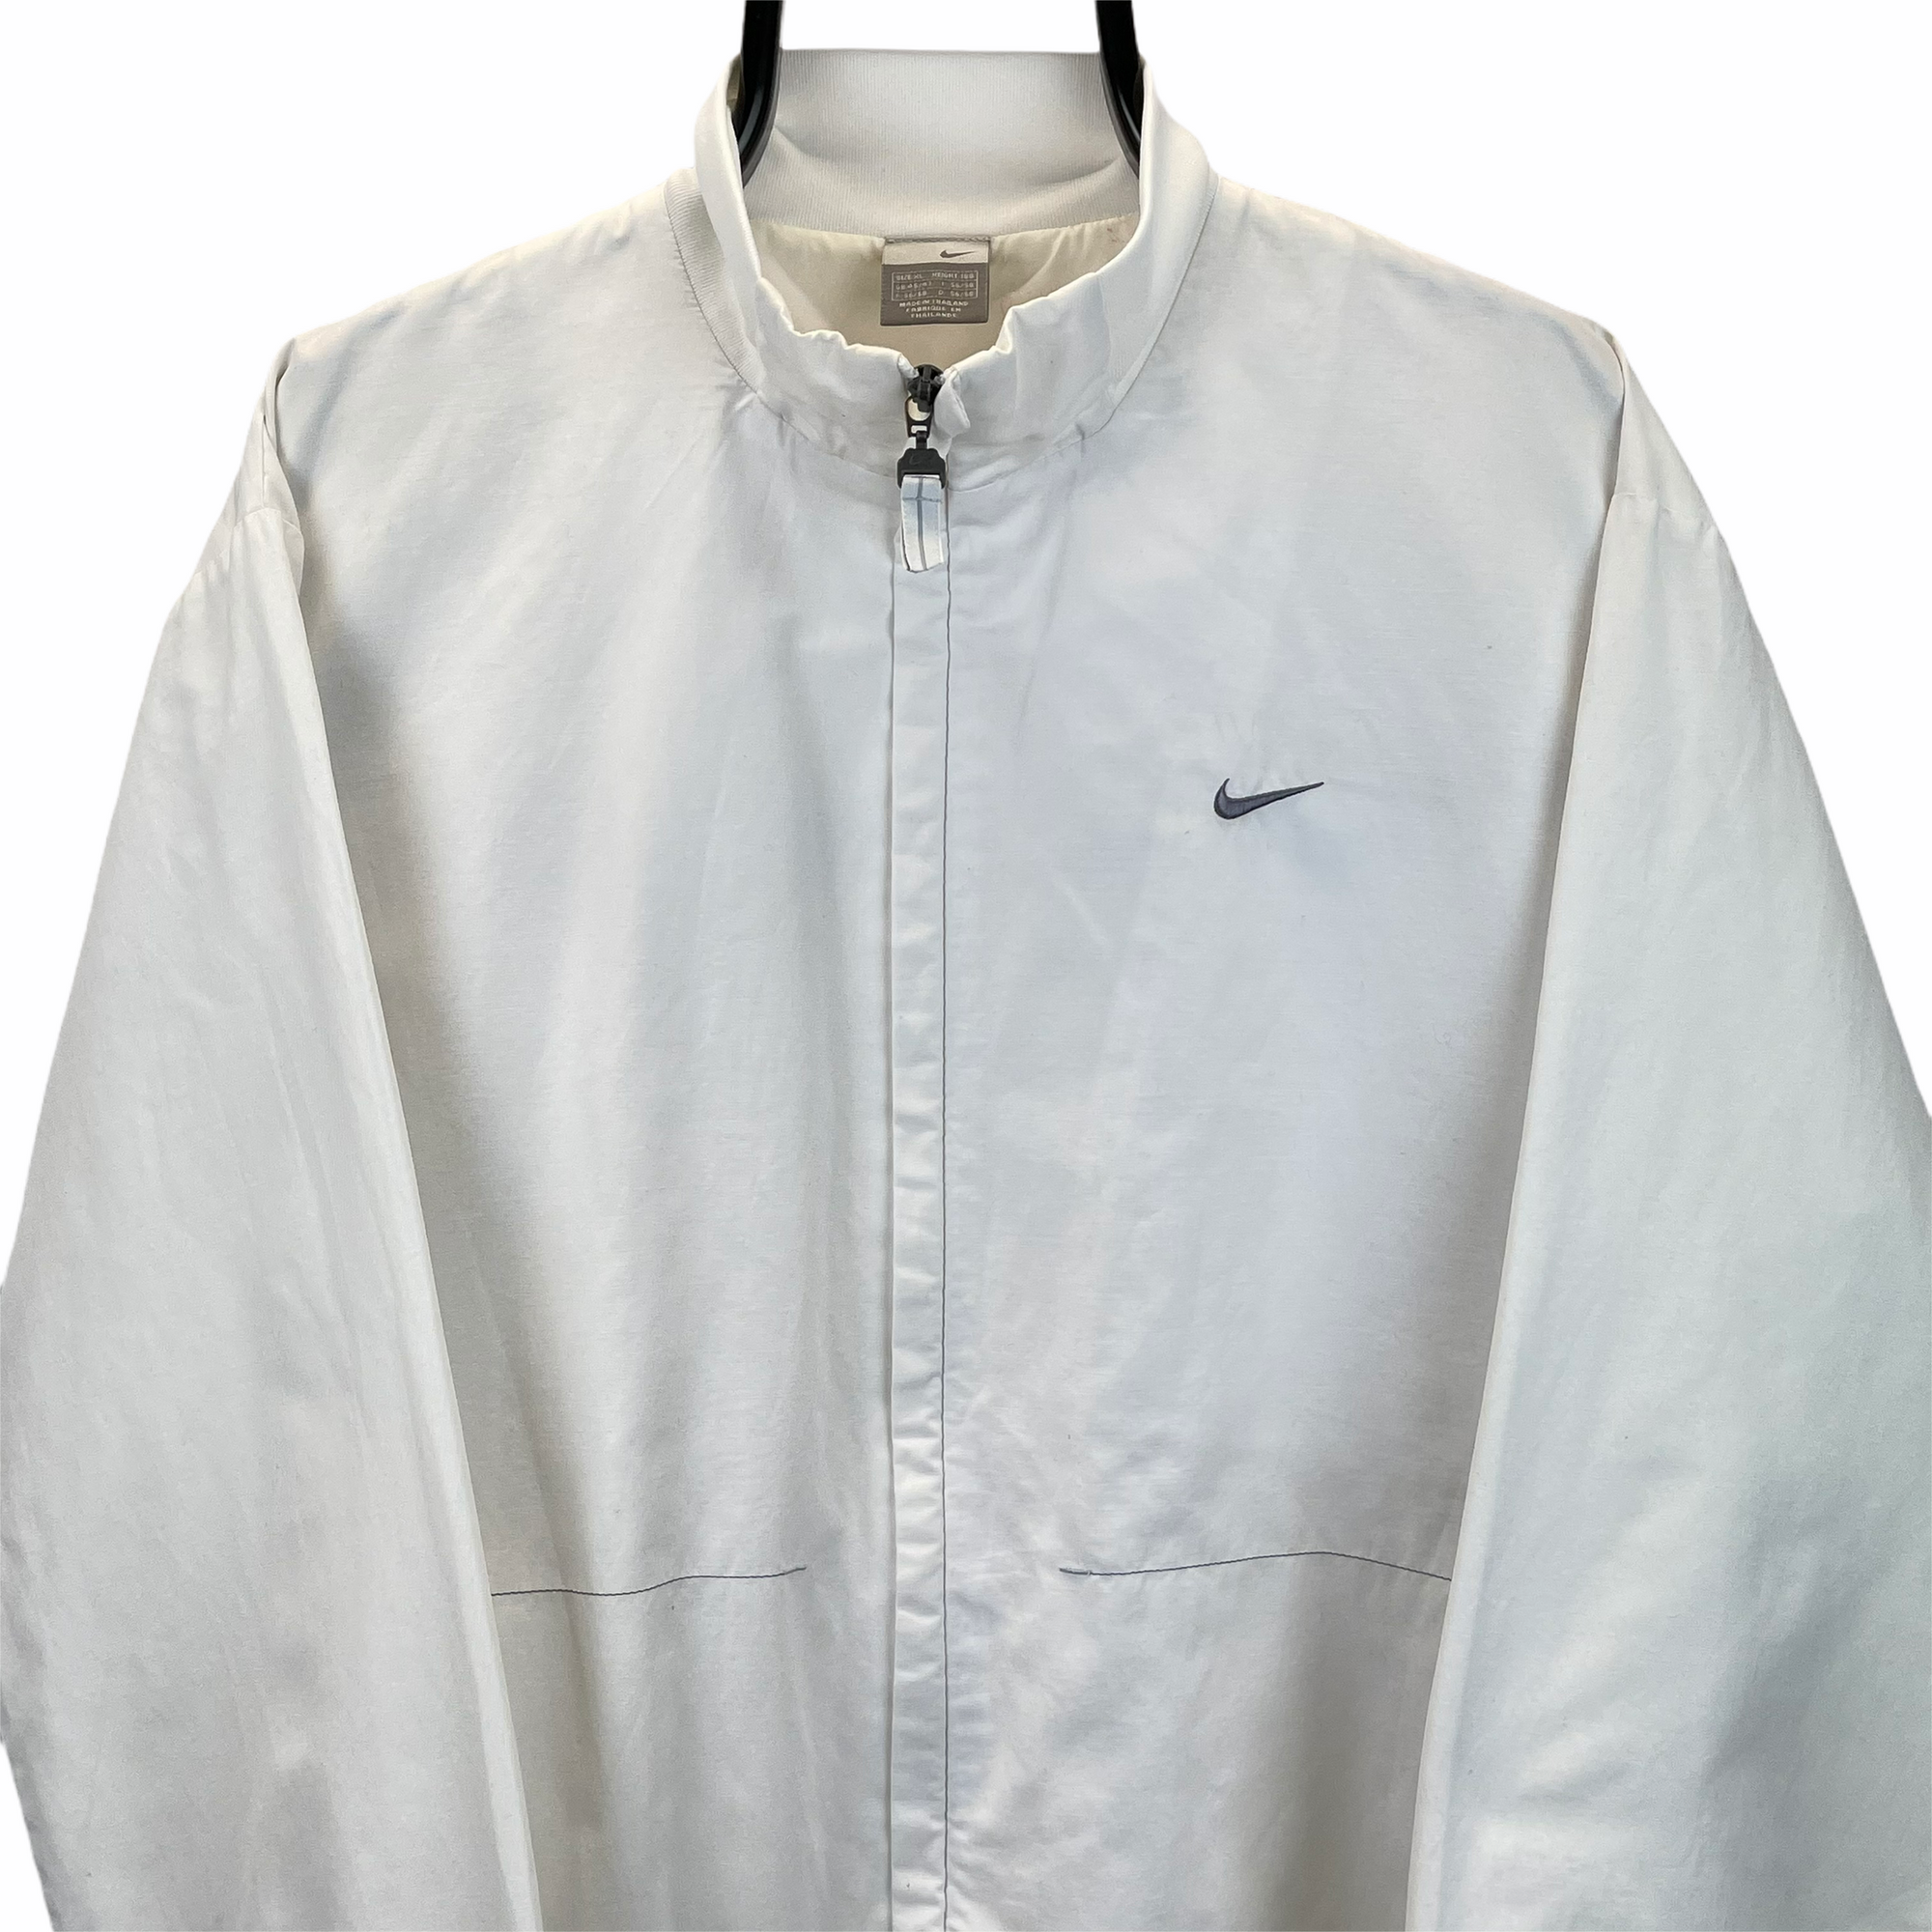 Vintage Nike Track Jacket in White - Men's Large/Women's XL